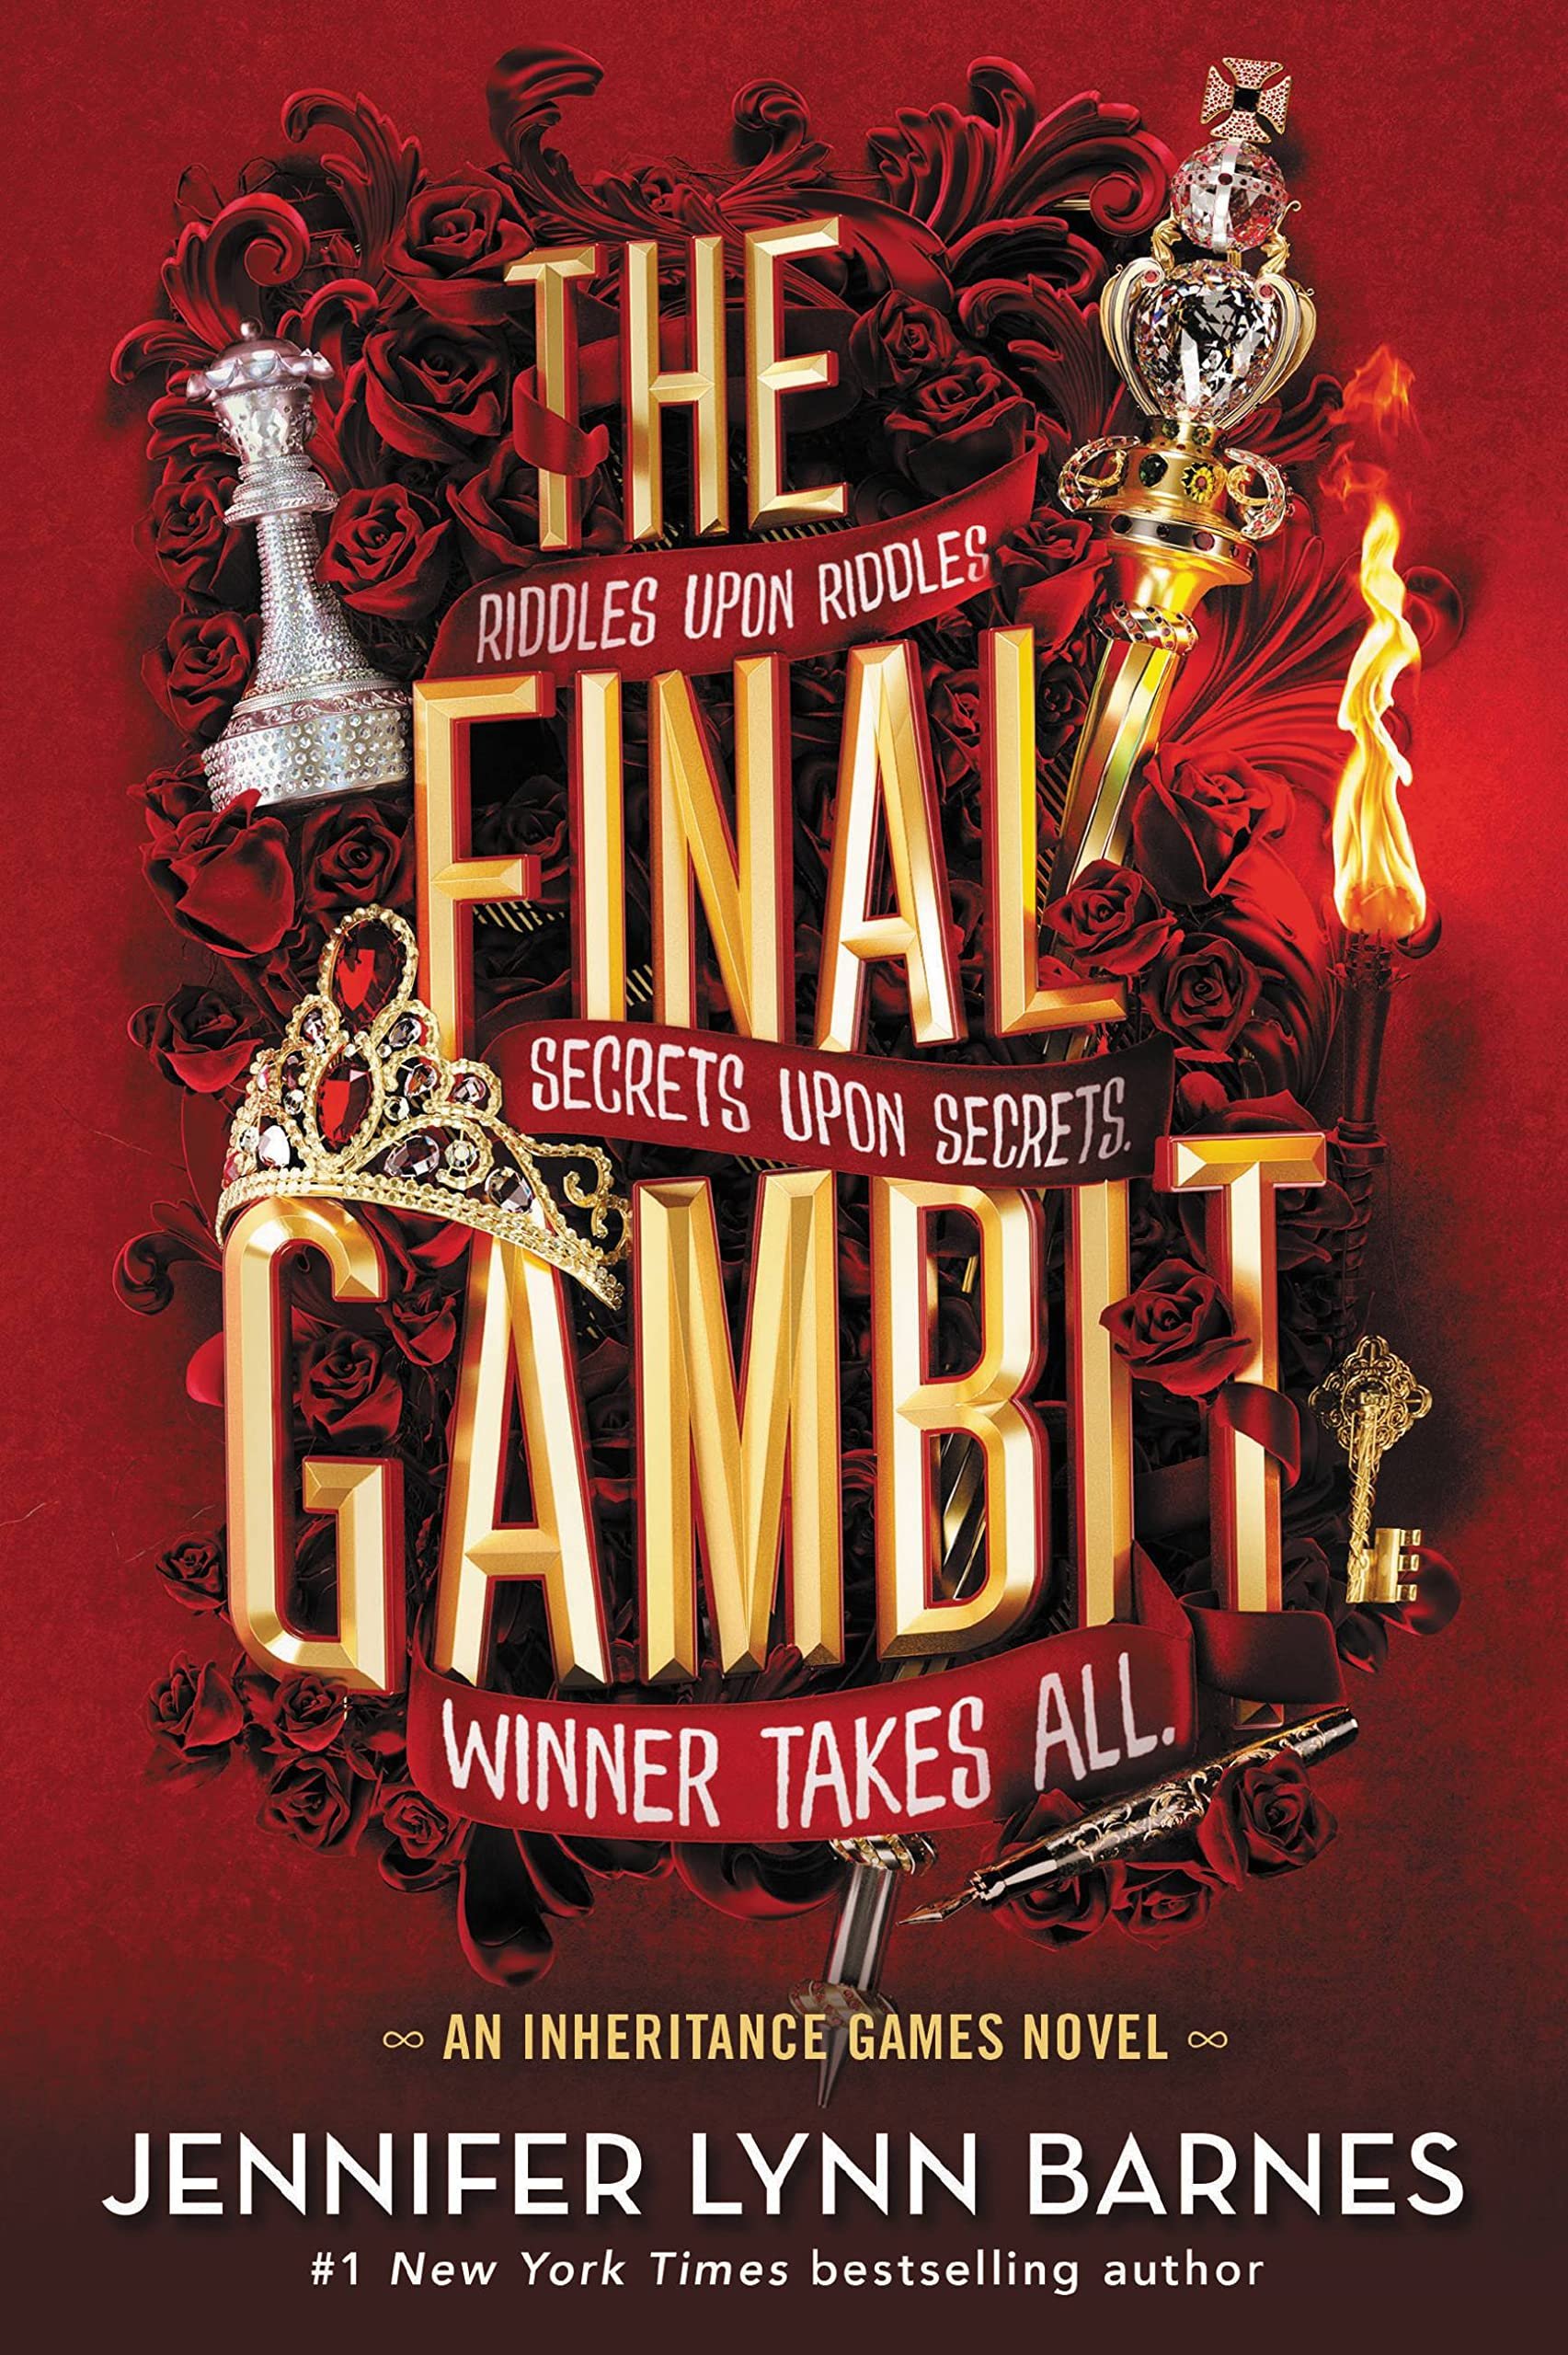 8. Aug 30 22 The Final Gambit.jpg